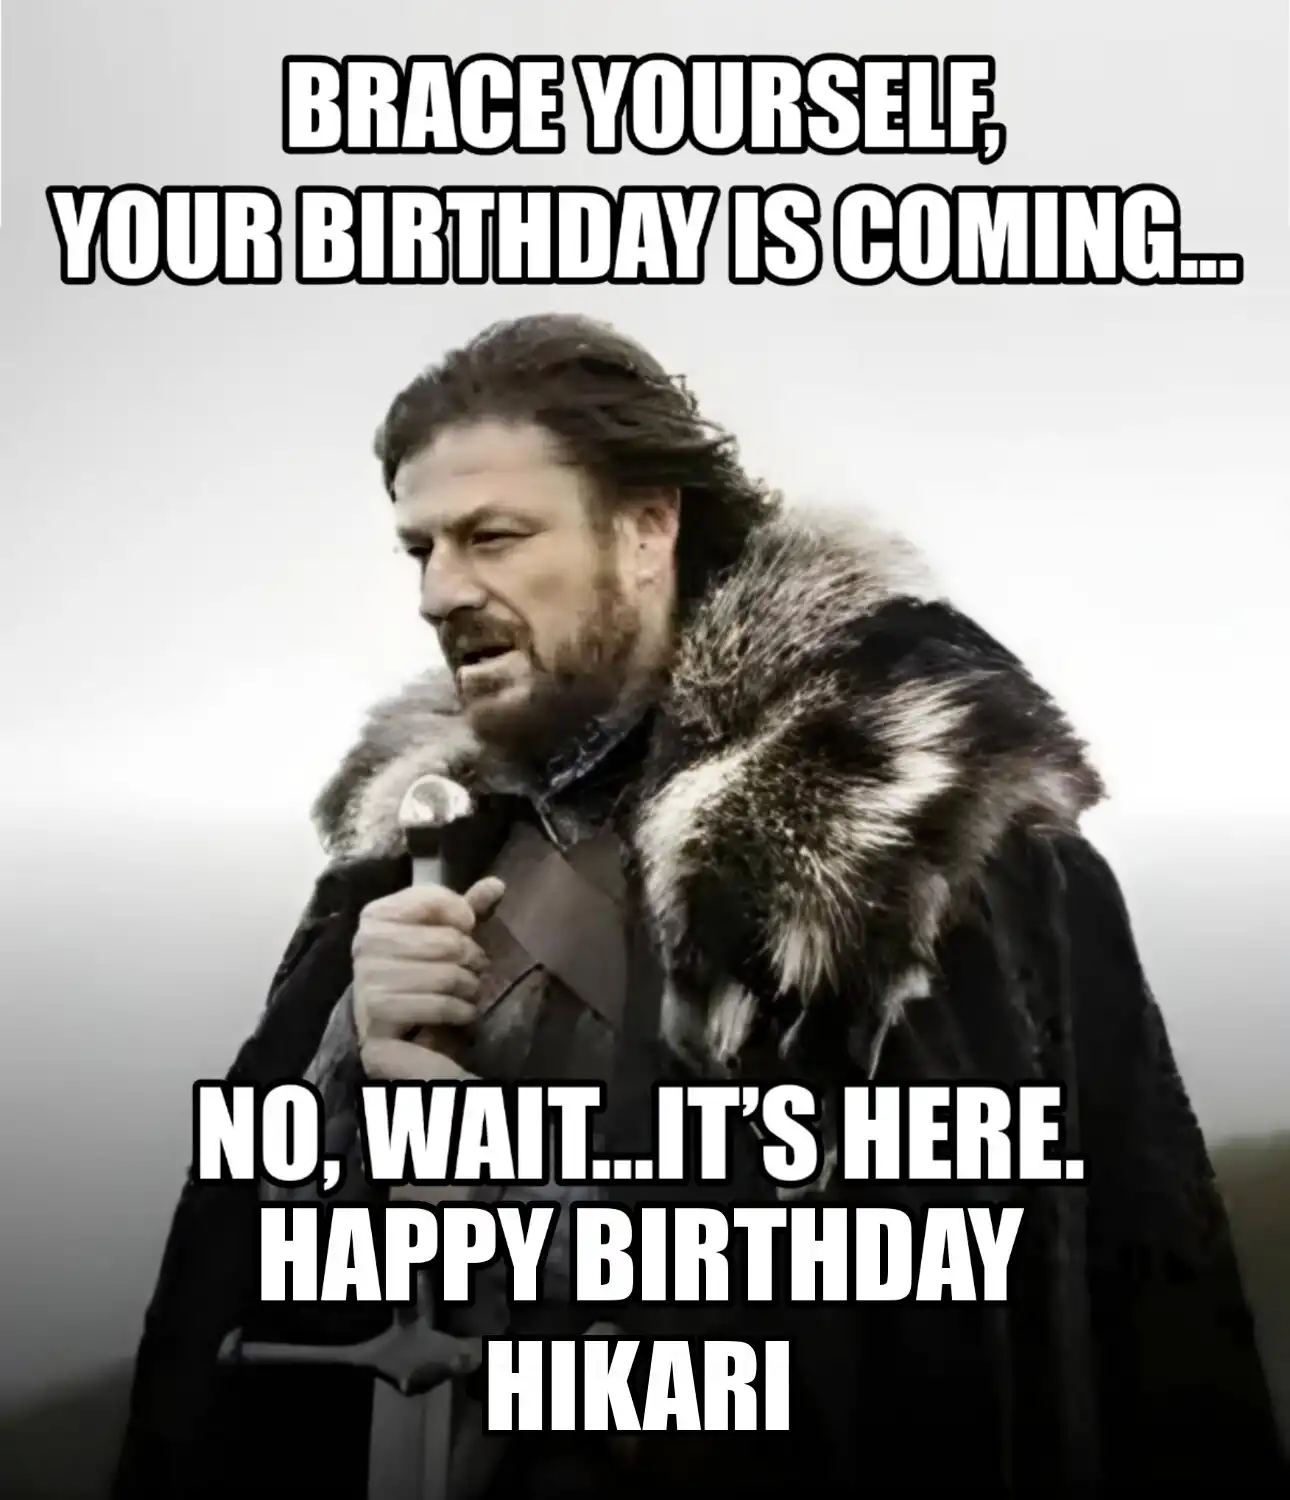 Happy Birthday Hikari Brace Yourself Your Birthday Is Coming Meme